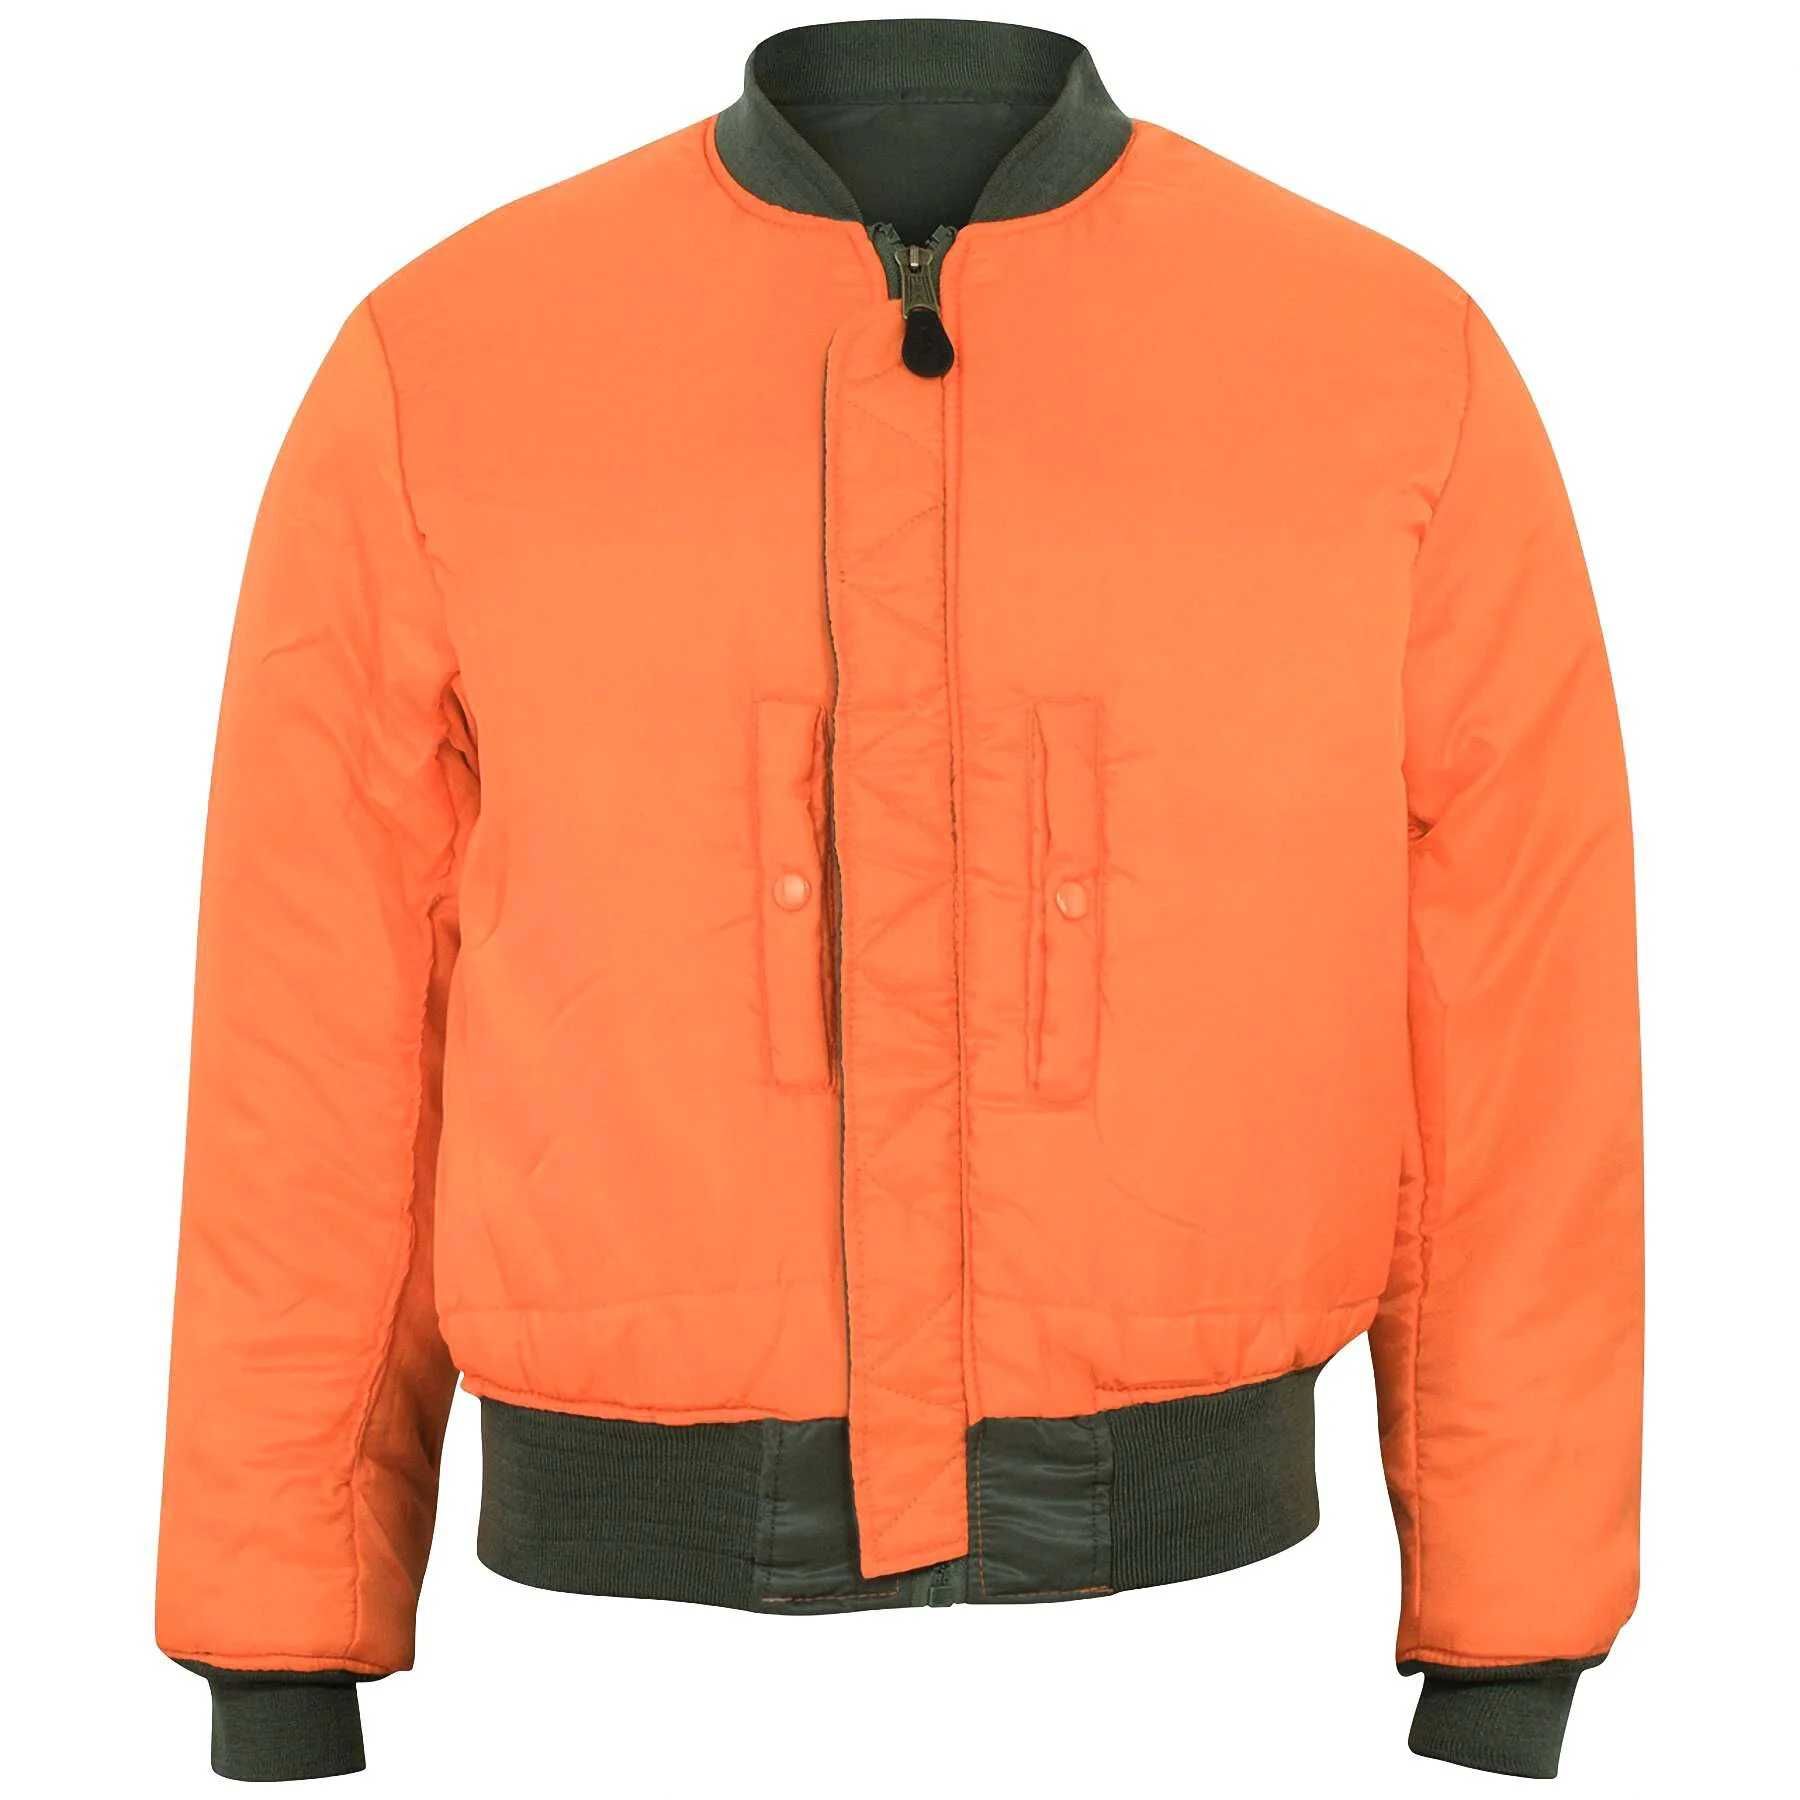 Куртка Бомбер льотна US FLIGHT JACKET MA1® STYLE Оливкова 10403001